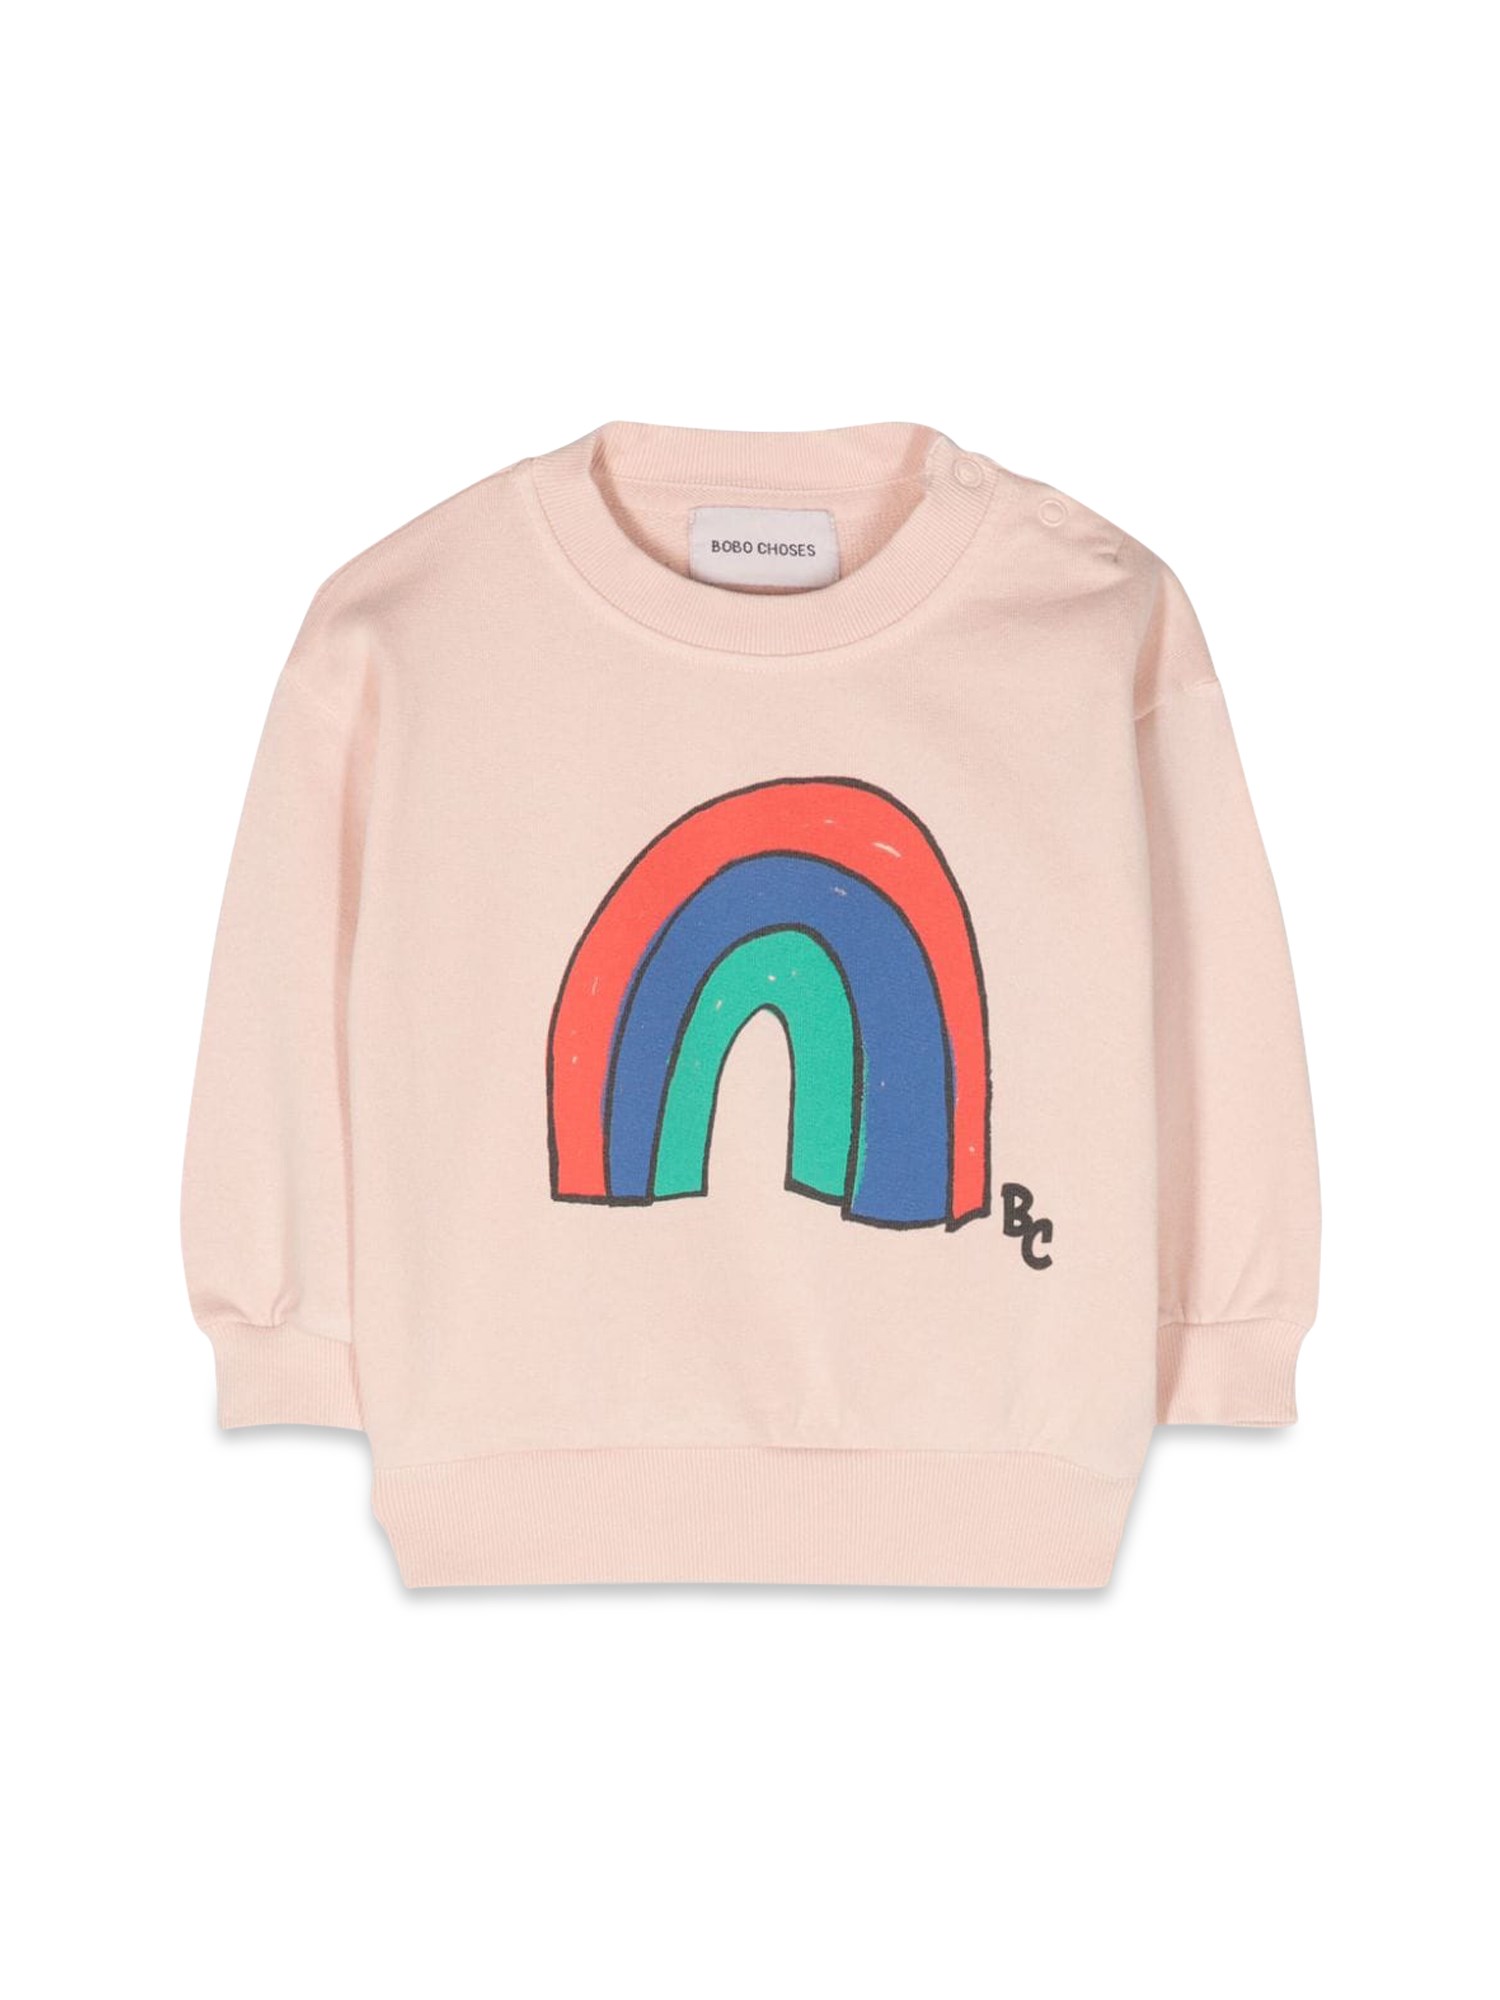 bobo choses baby rainbow sweatshirt